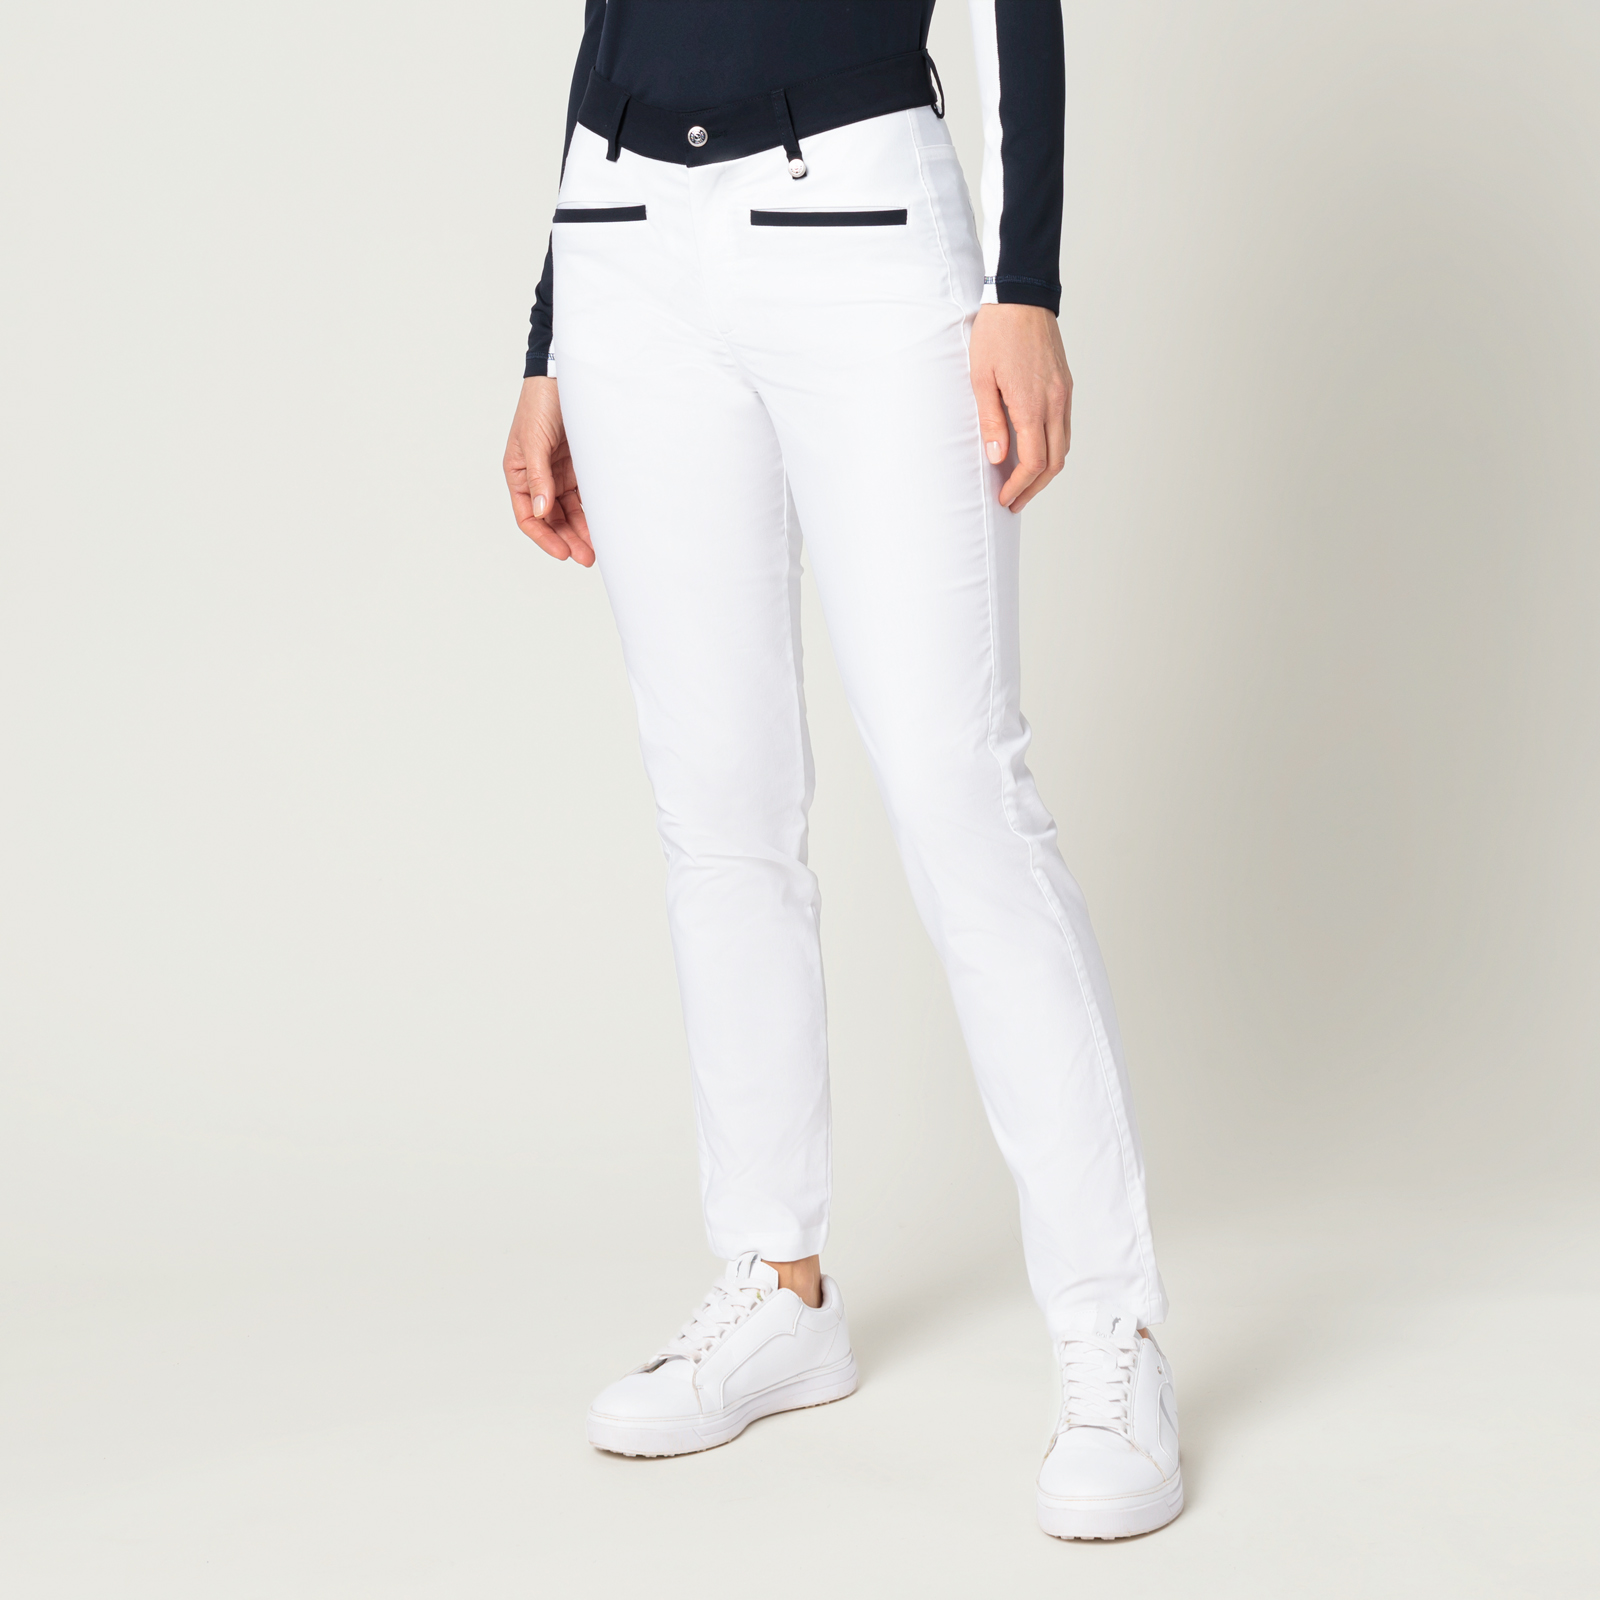 AllroundWork stretch trousers holster pockets | Buytshirtsonline